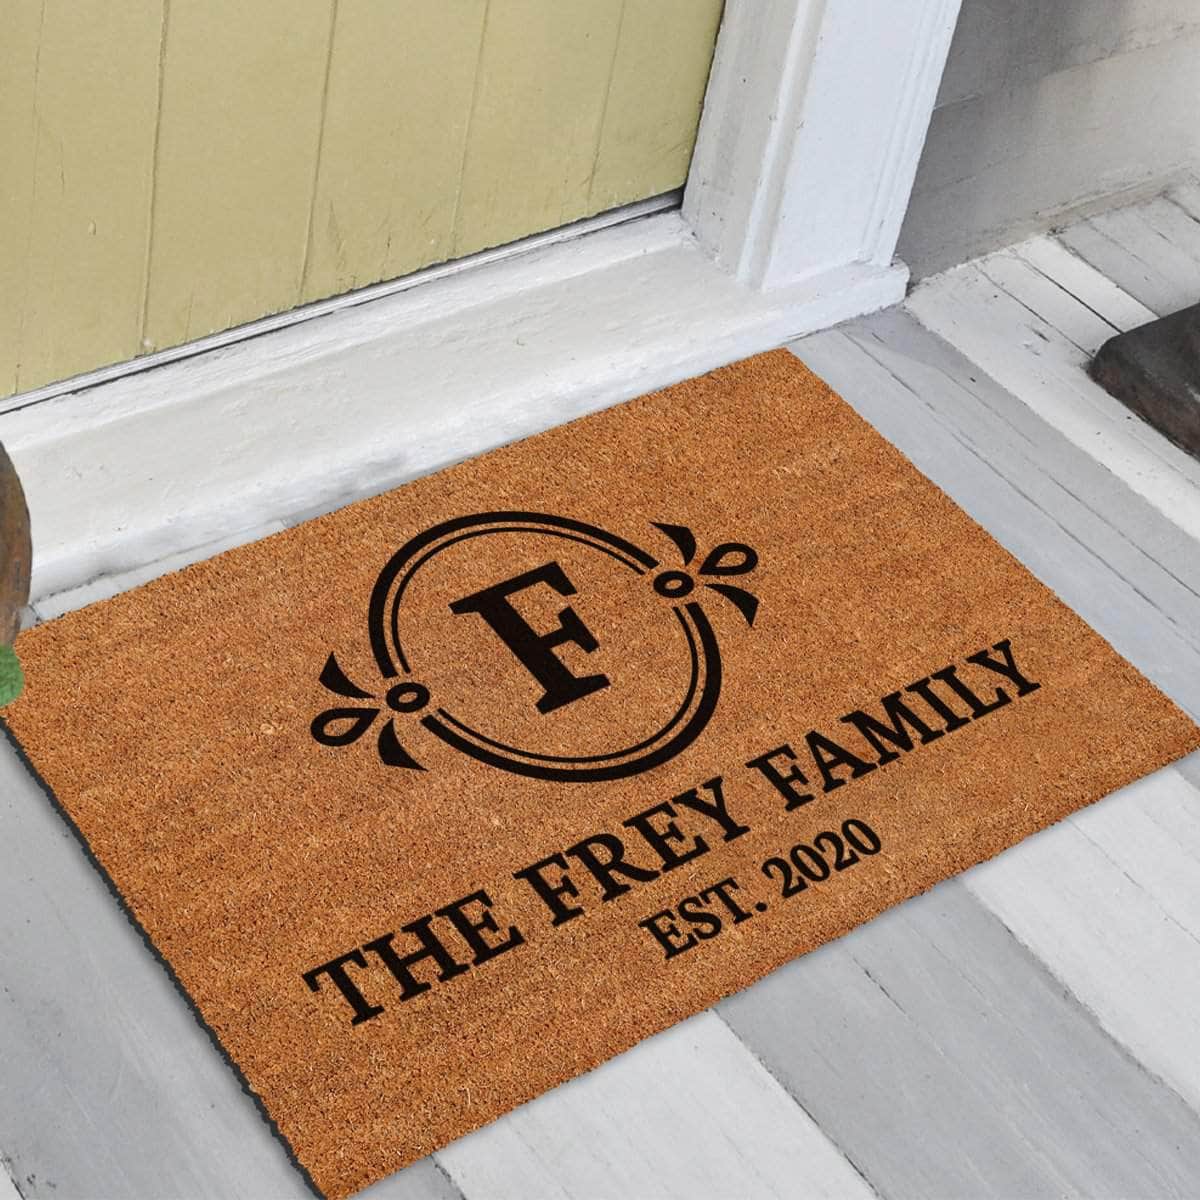 Family Name Est Date - Personalised Doormat